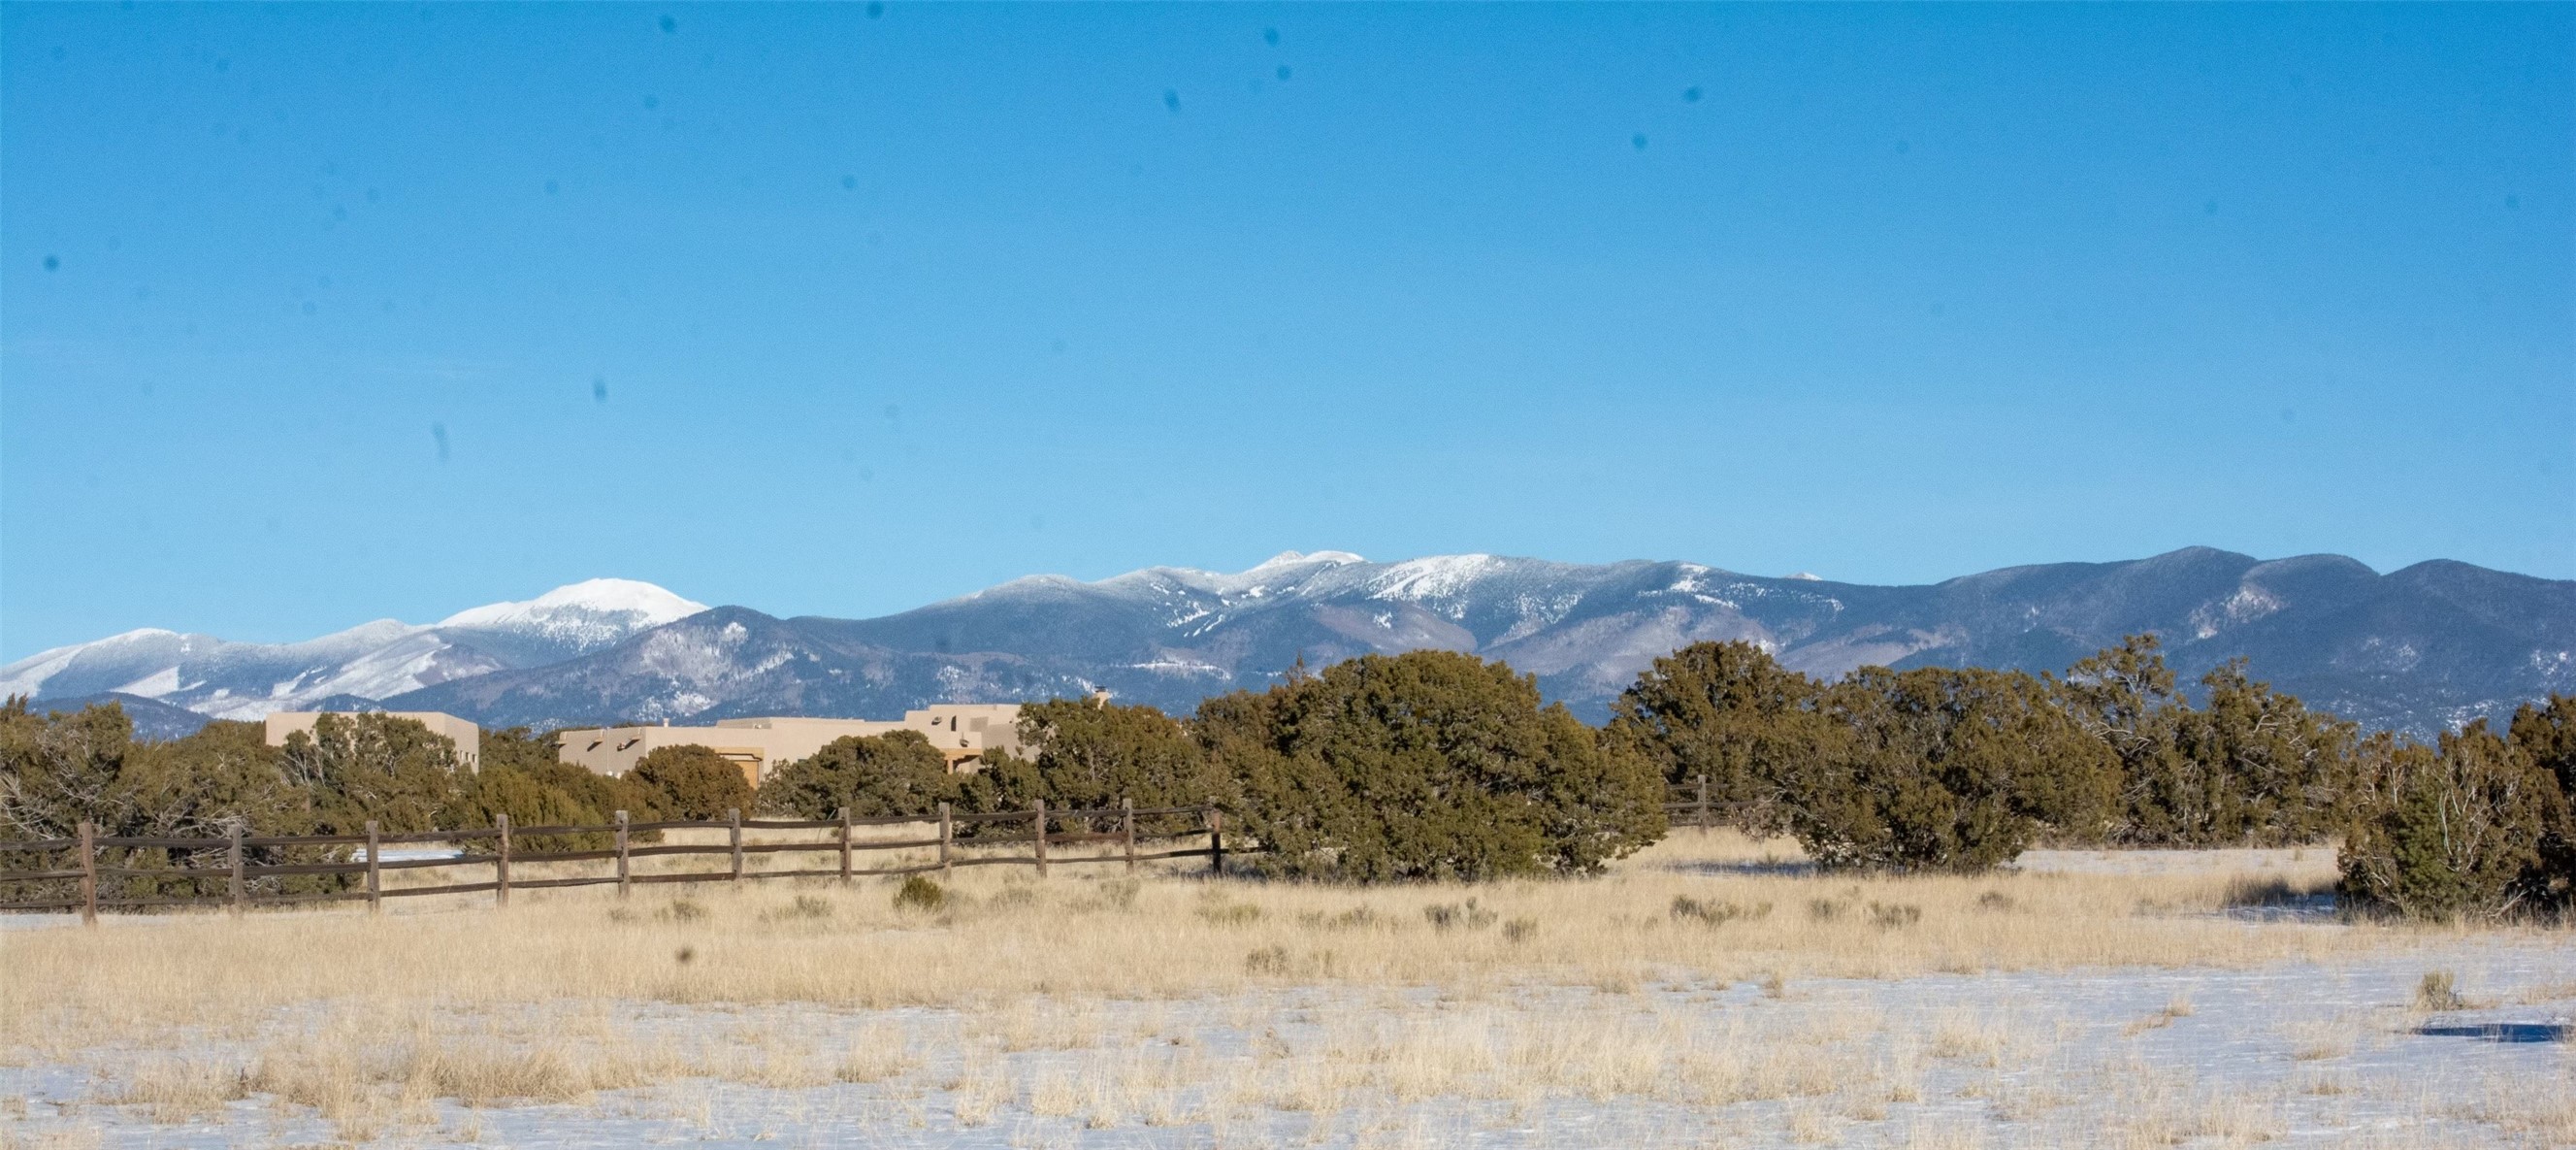 52 W. Camino del Cielo, Santa Fe, New Mexico 87506, ,Land,For Sale,52 W. Camino del Cielo,202400415